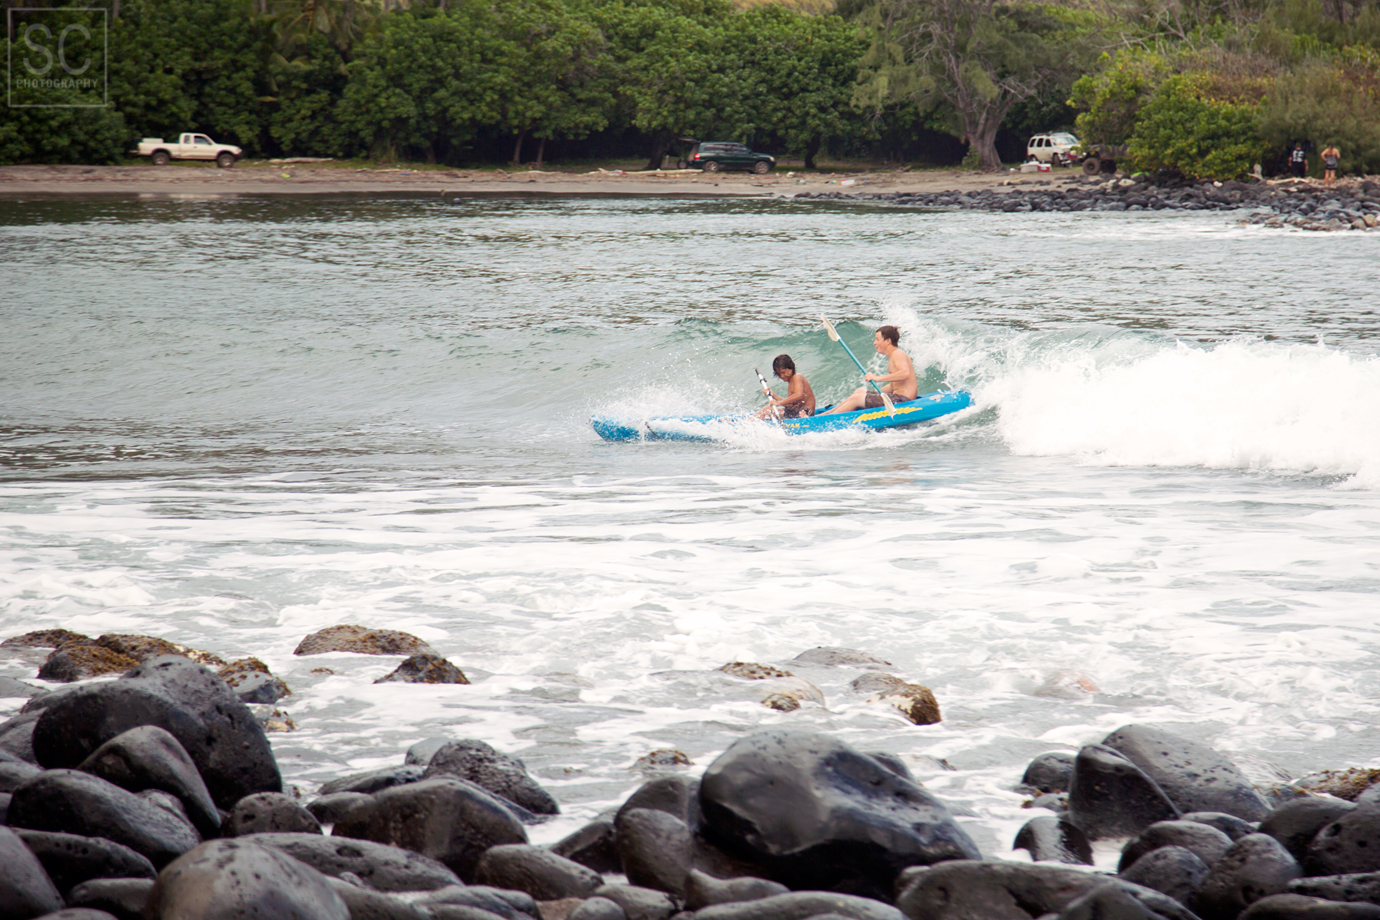 These kids were having a blast surfing in a kayak